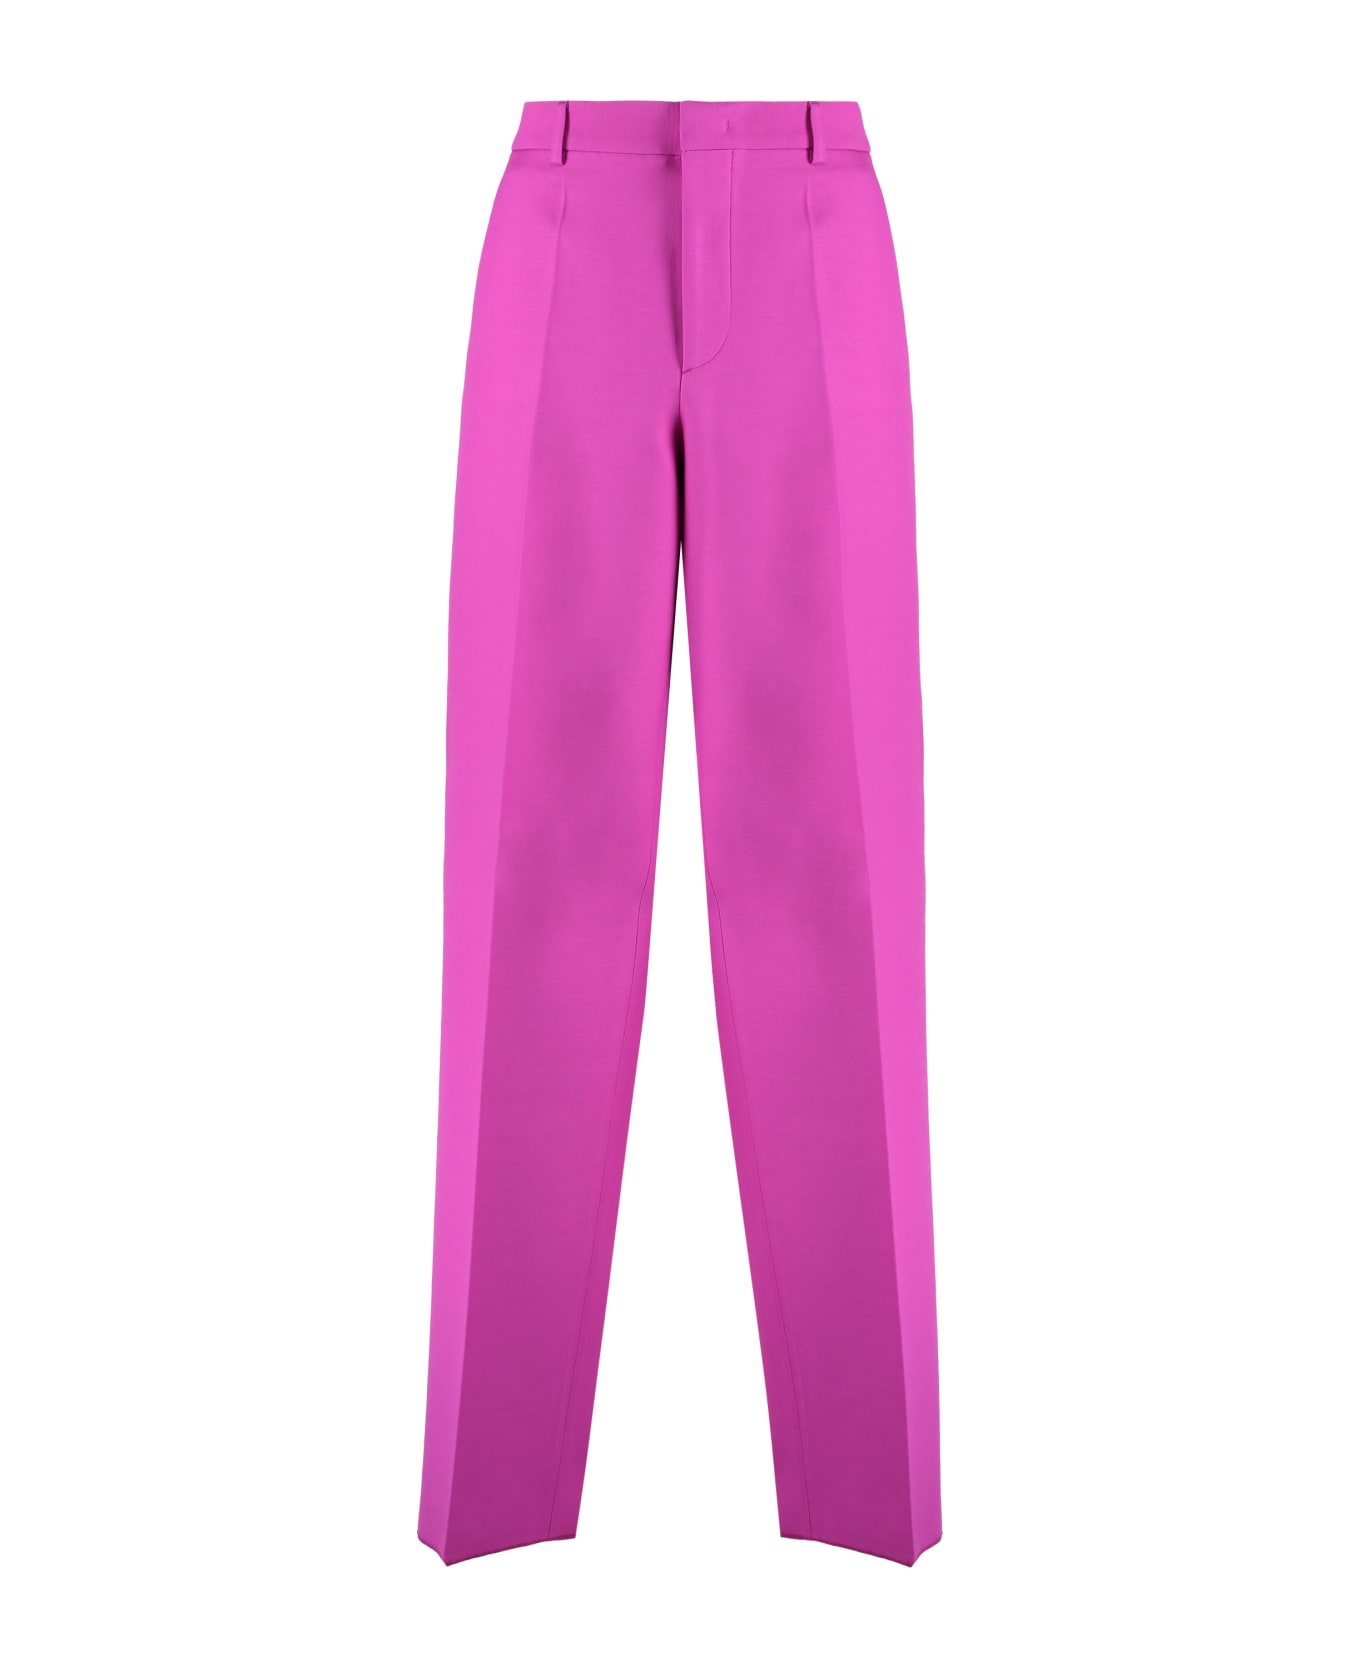 Valentino Garavani Tailored Wool Trousers - Pp pink